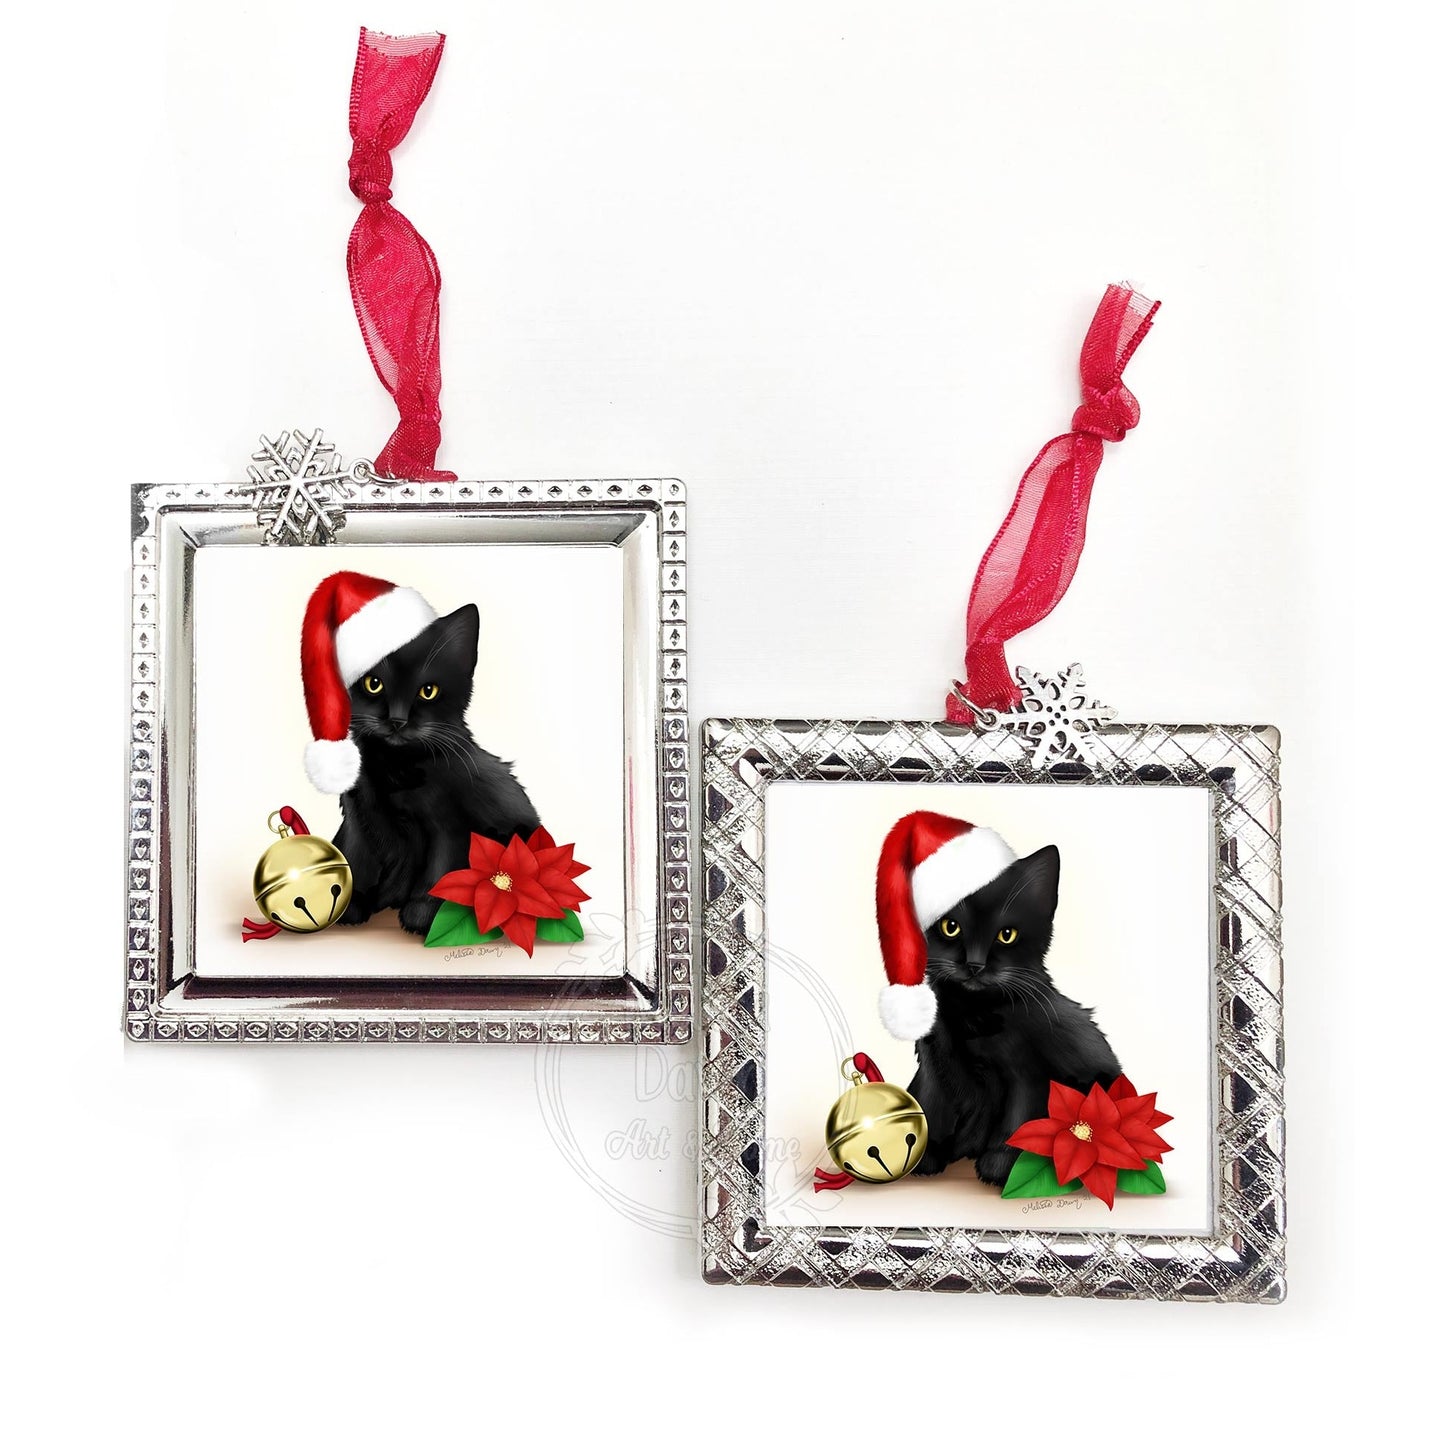 Black Kitten Ornament / Black Cat Ornament / Personalized Cat Ornament / Cat Ornament / Cat Lovers Gift / Santa Cat Ornament / Santa Cat / Square Ornament